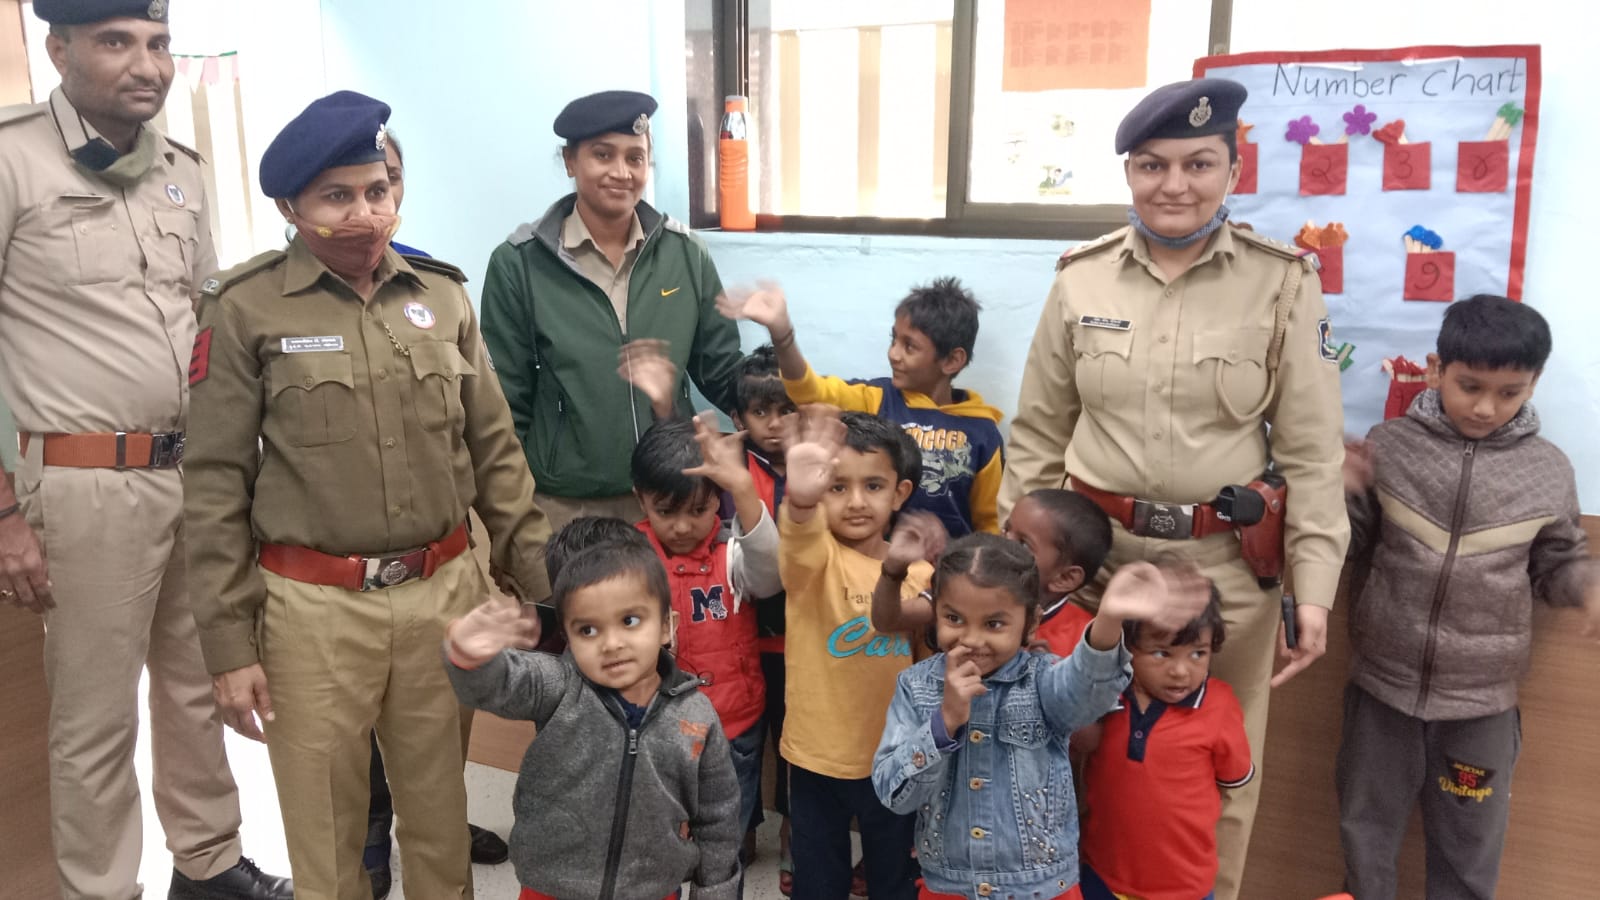 visit by the police department of Gandhinagar